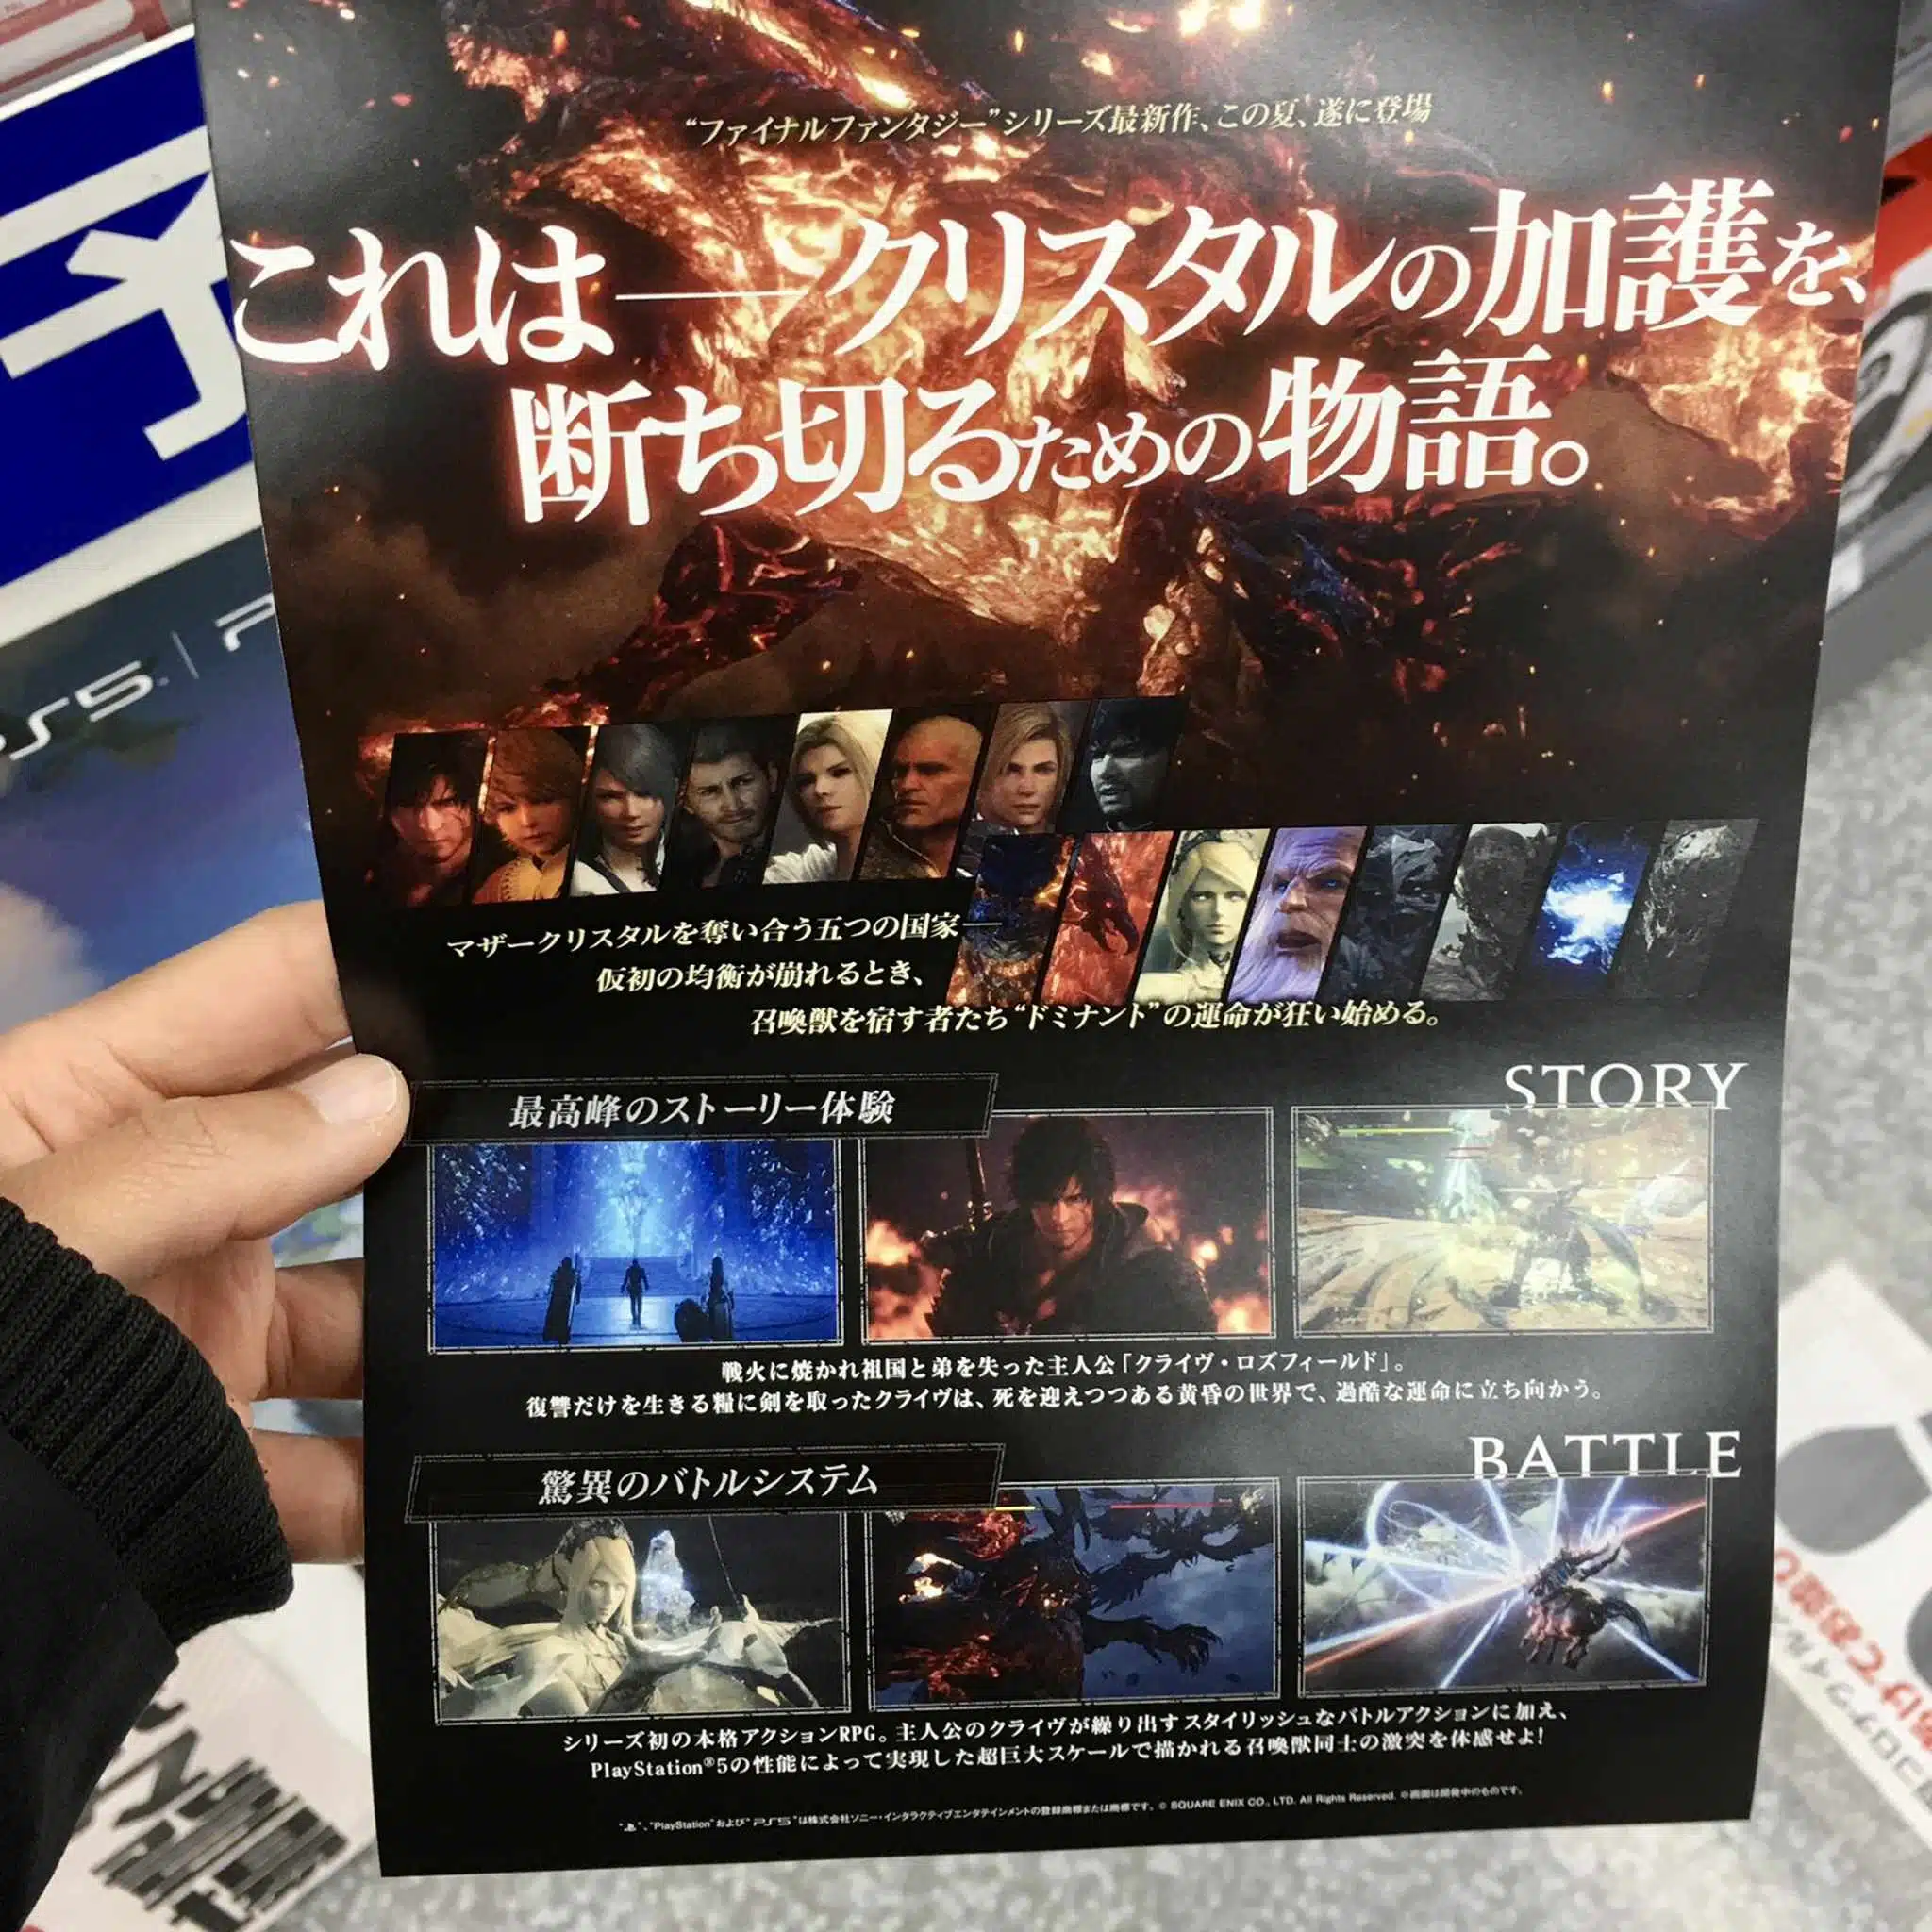 Final Fantasy XVI marketing 